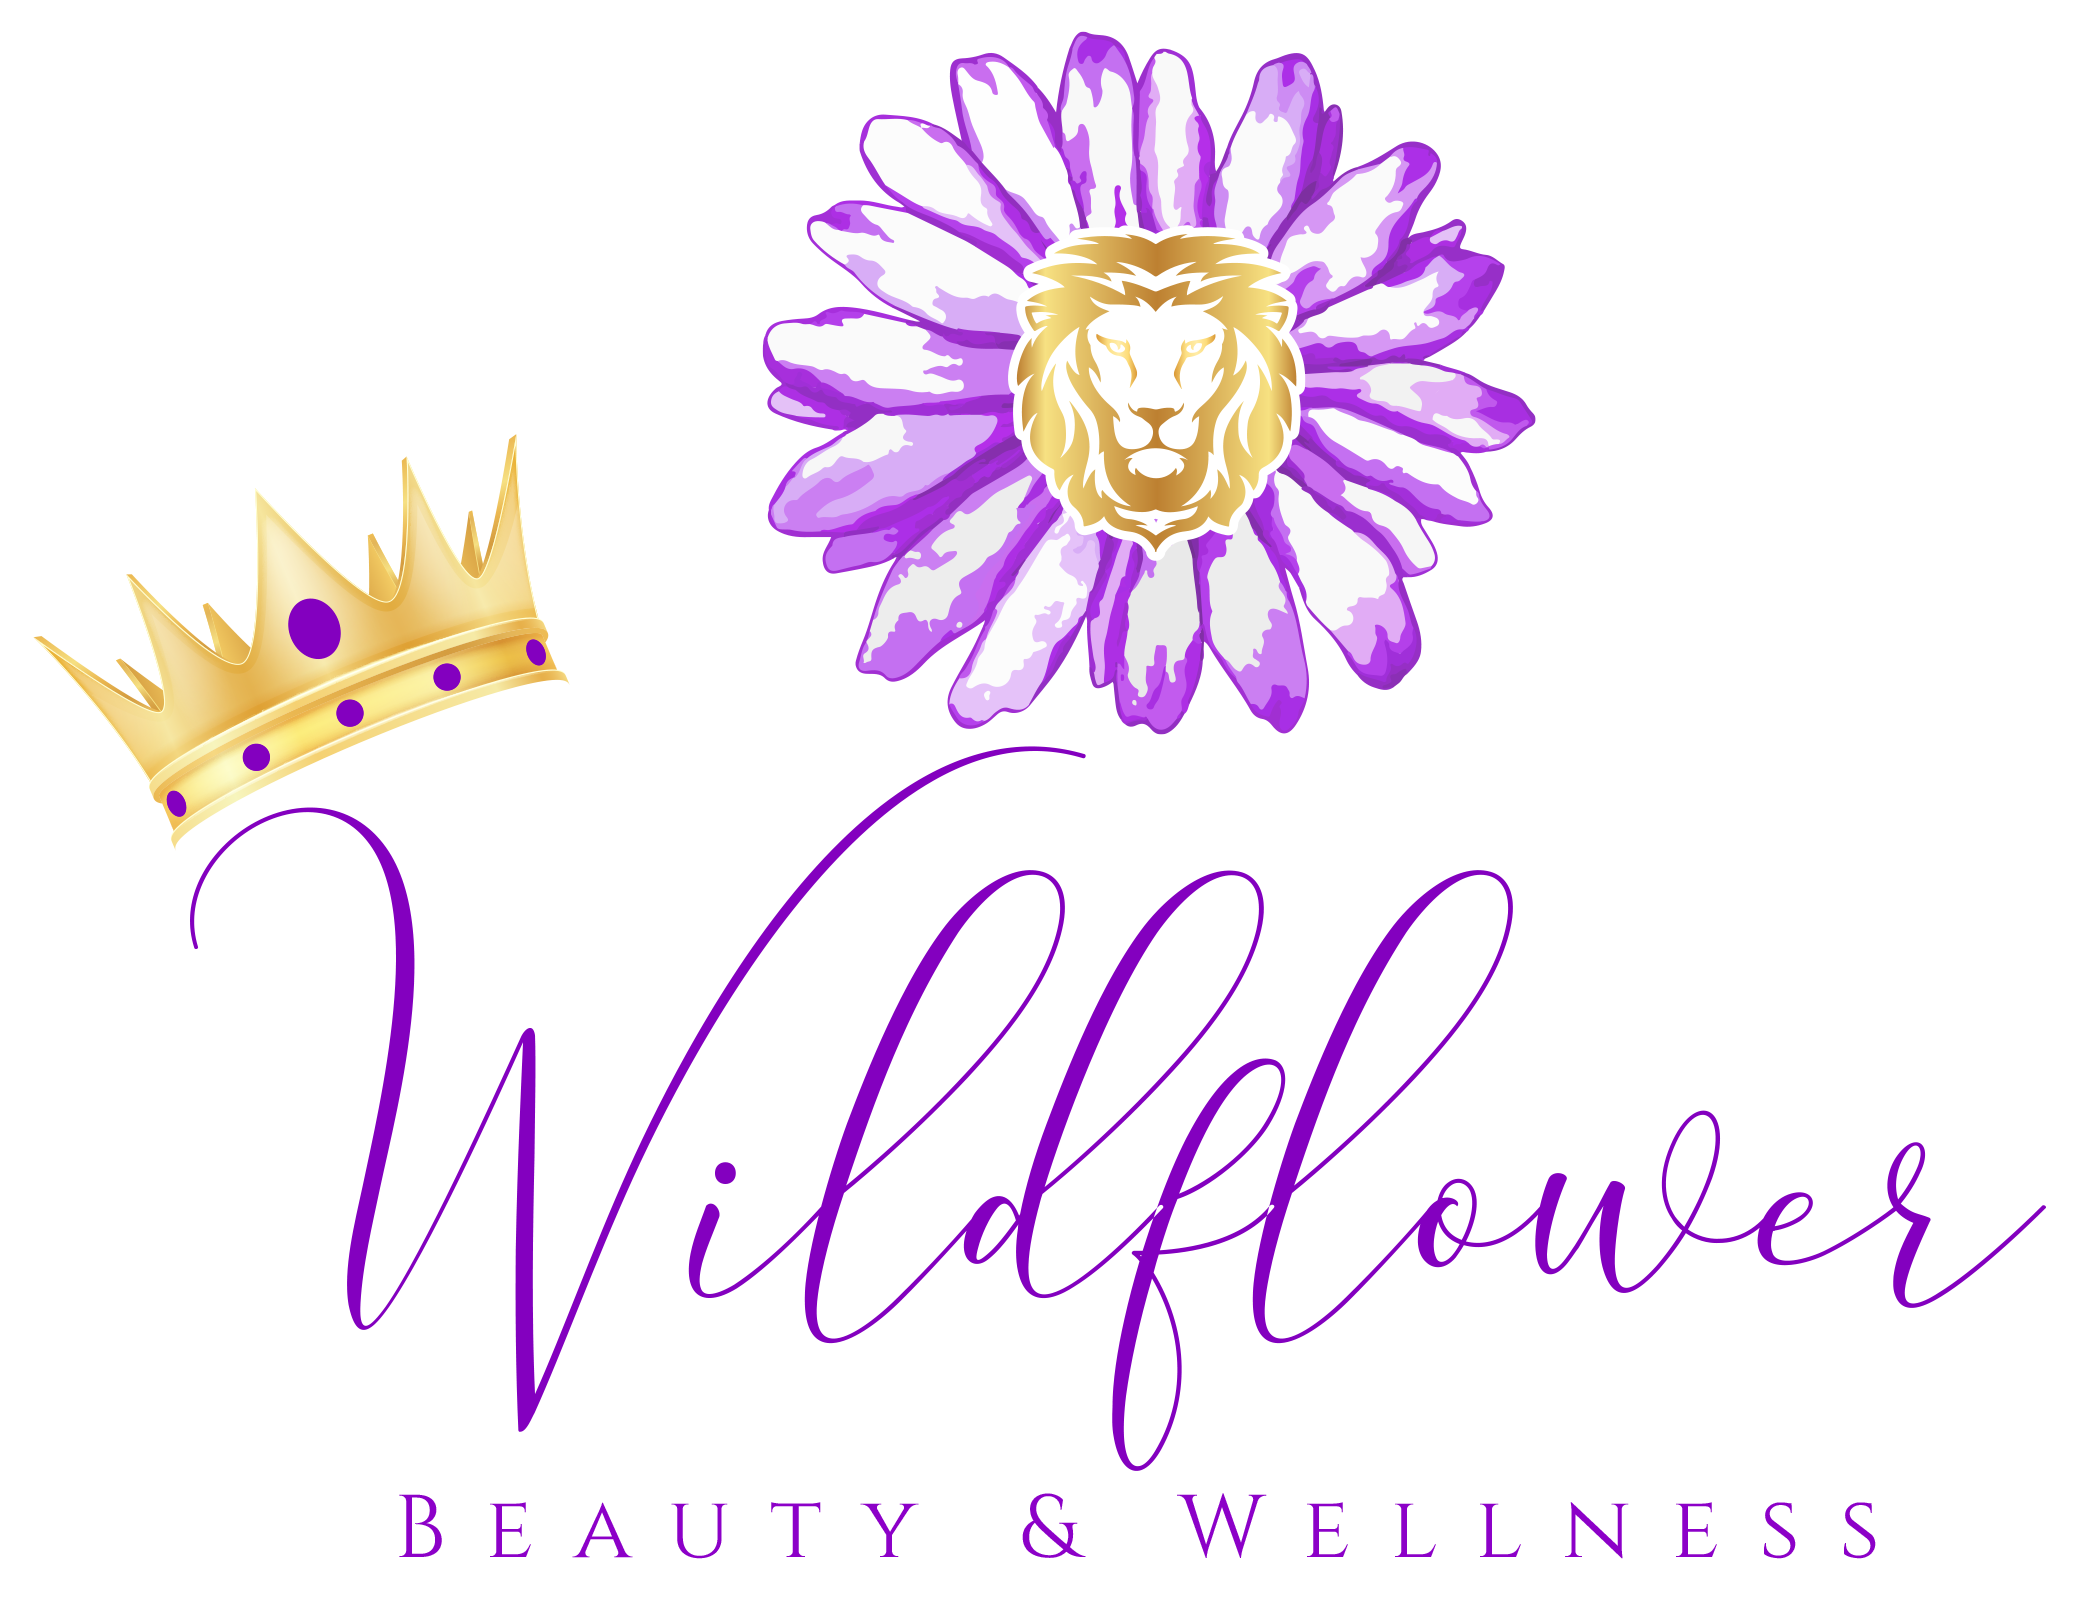 Wildflower Beauty & Wellness